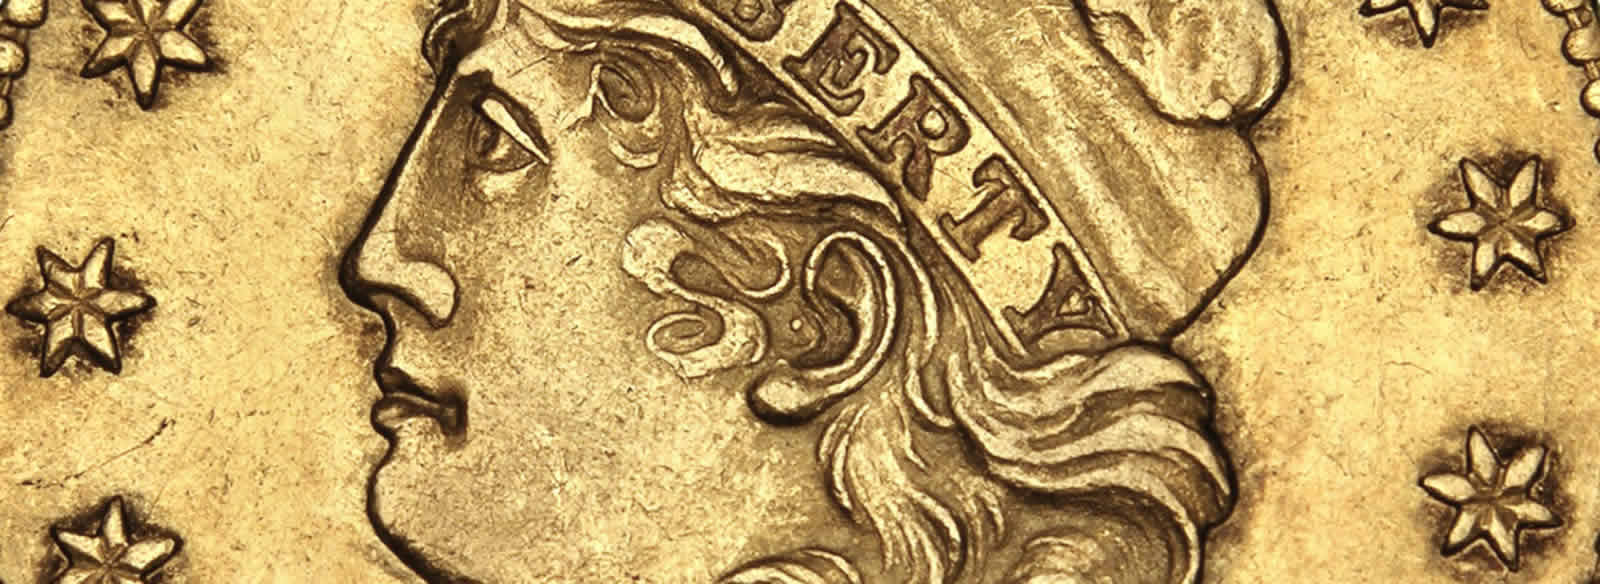 HEADER-COLUMN-coins